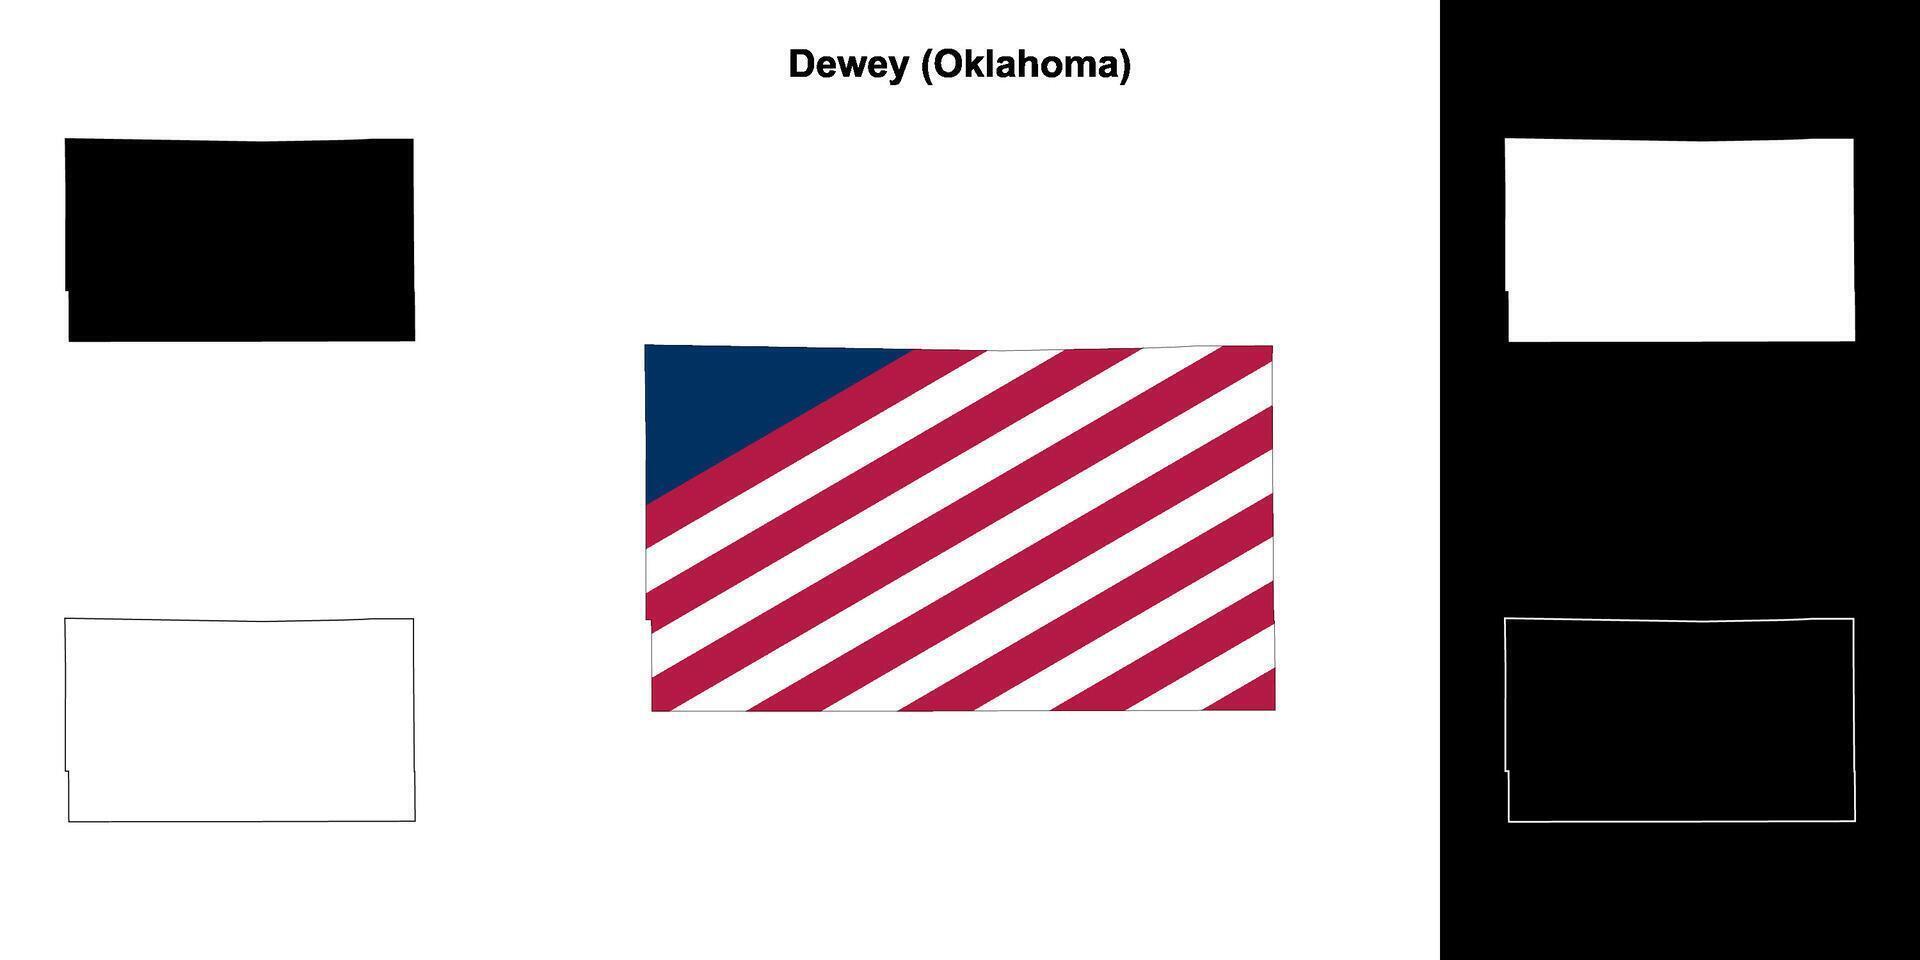 Dewey condado, Oklahoma esboço mapa conjunto vetor